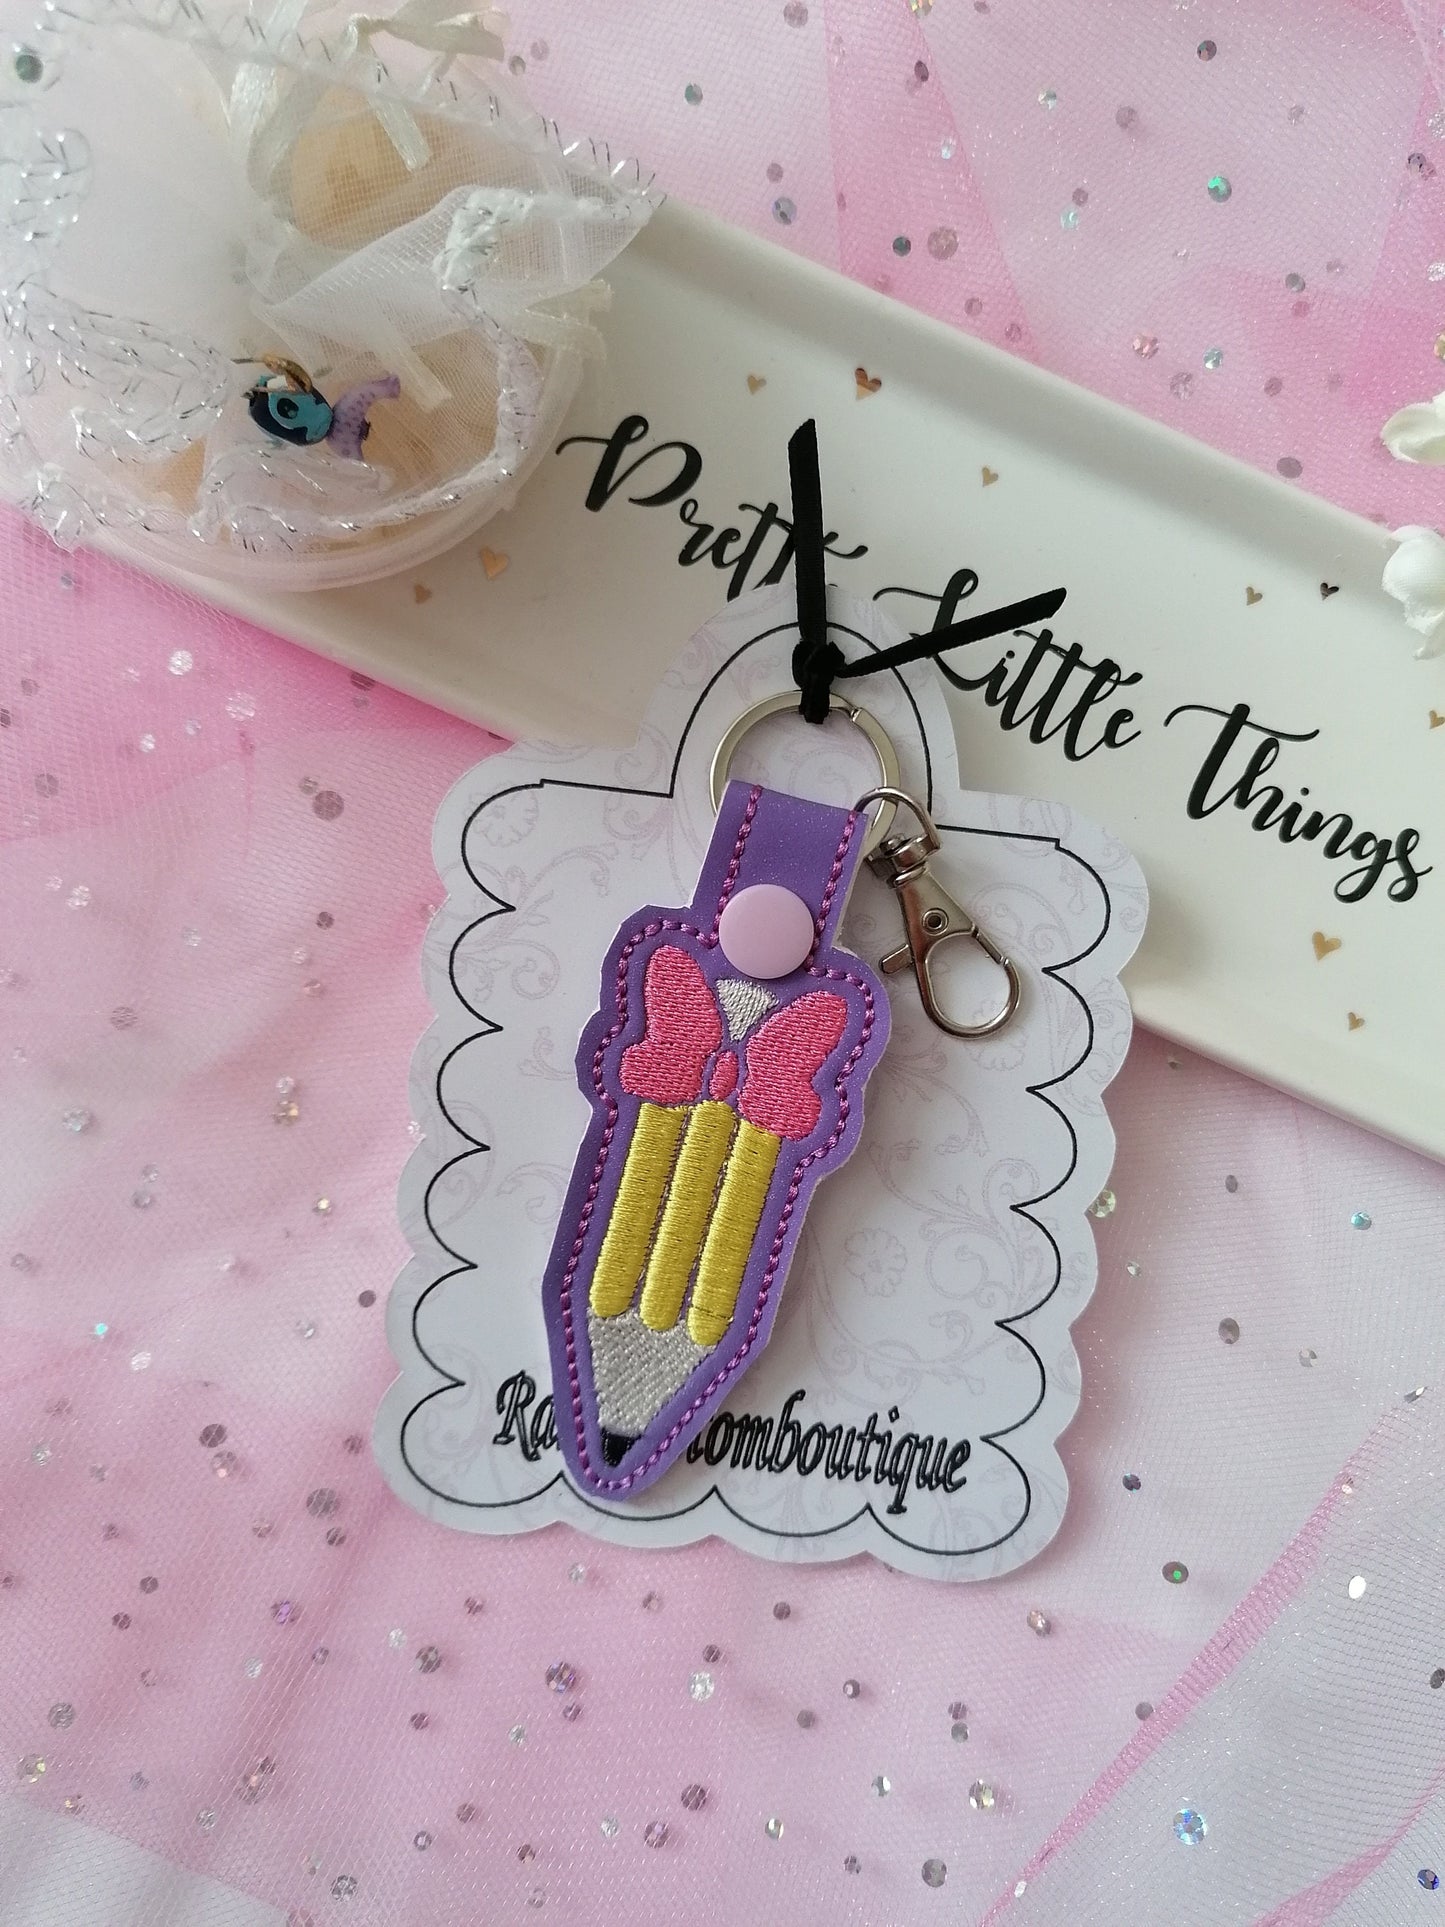 Purple Glittery Pencil Key Fob, Pencil Key-chain, Handmade Key Fob, Embroidered Design, Pencil Design